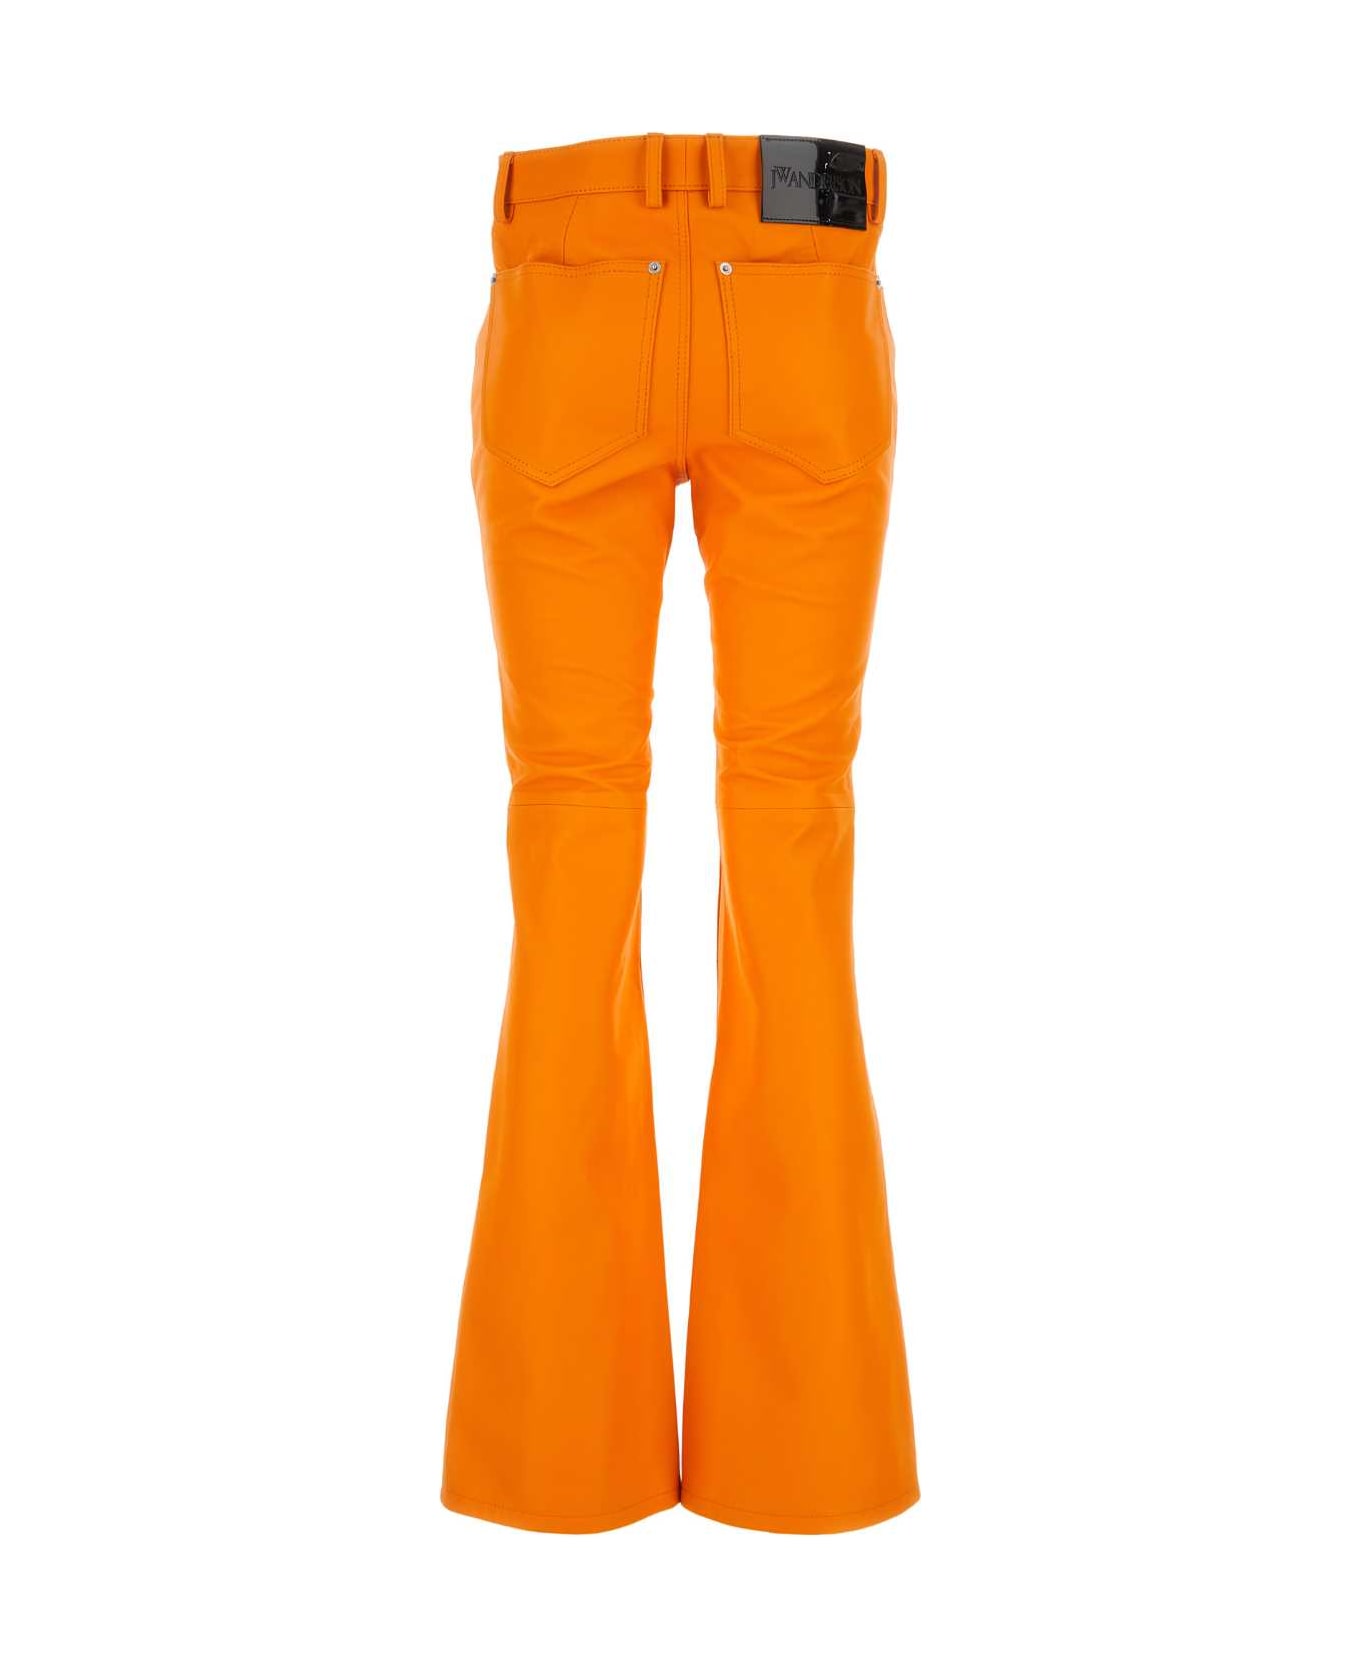 J.W. Anderson Orange Leather Pant - Orange ボトムス